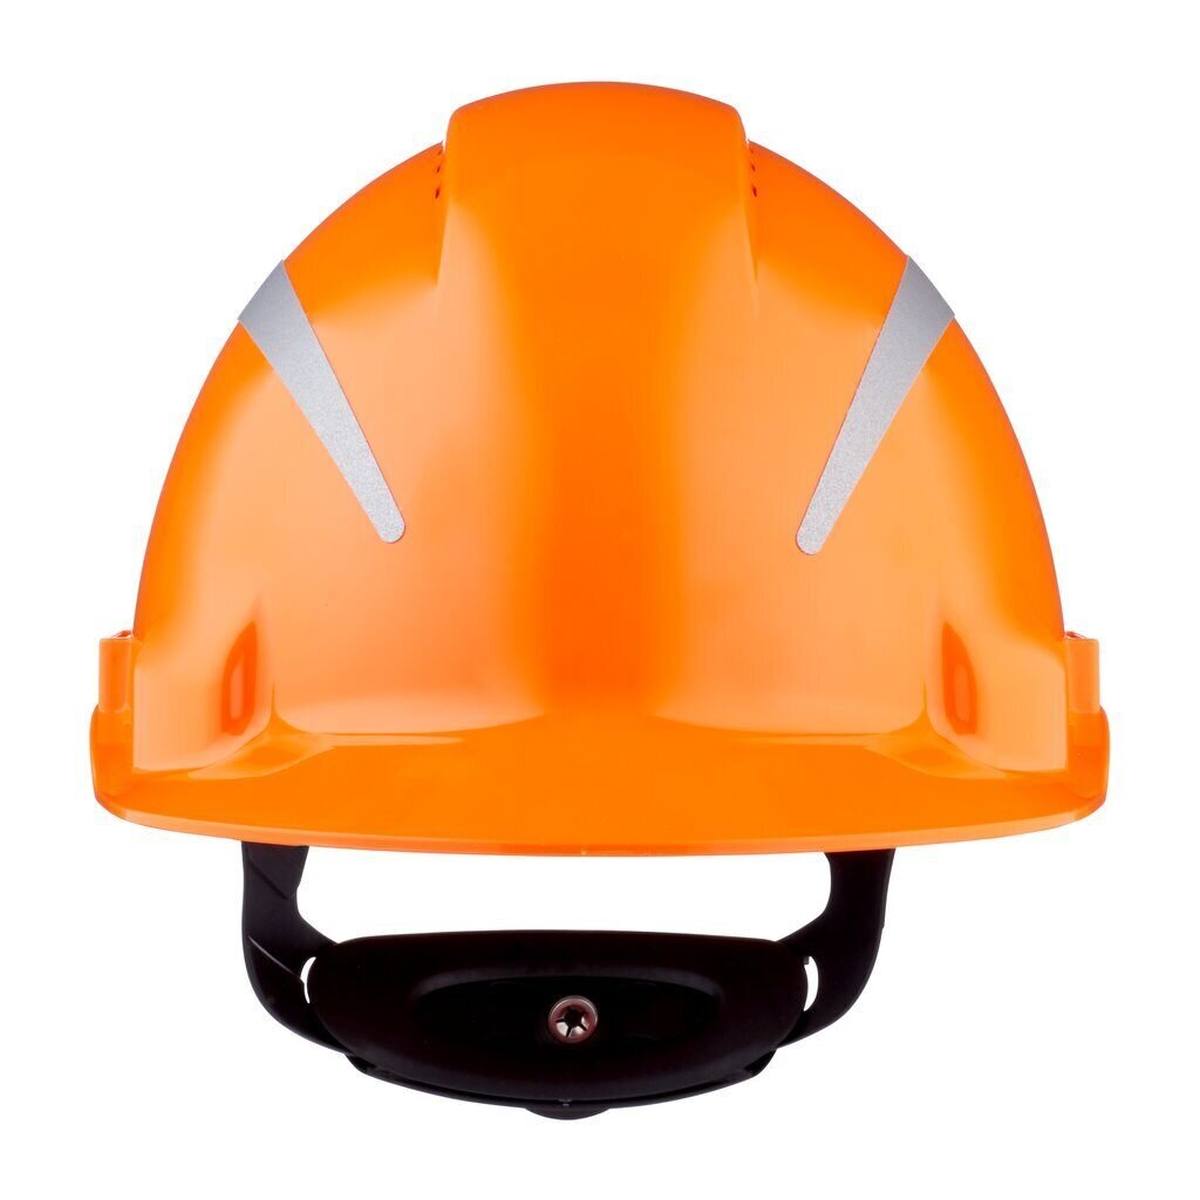 3M G3000 safety helmet with UV indicator, orange, ABS, ventilated ratchet fastener, plastic sweatband, reflective sticker